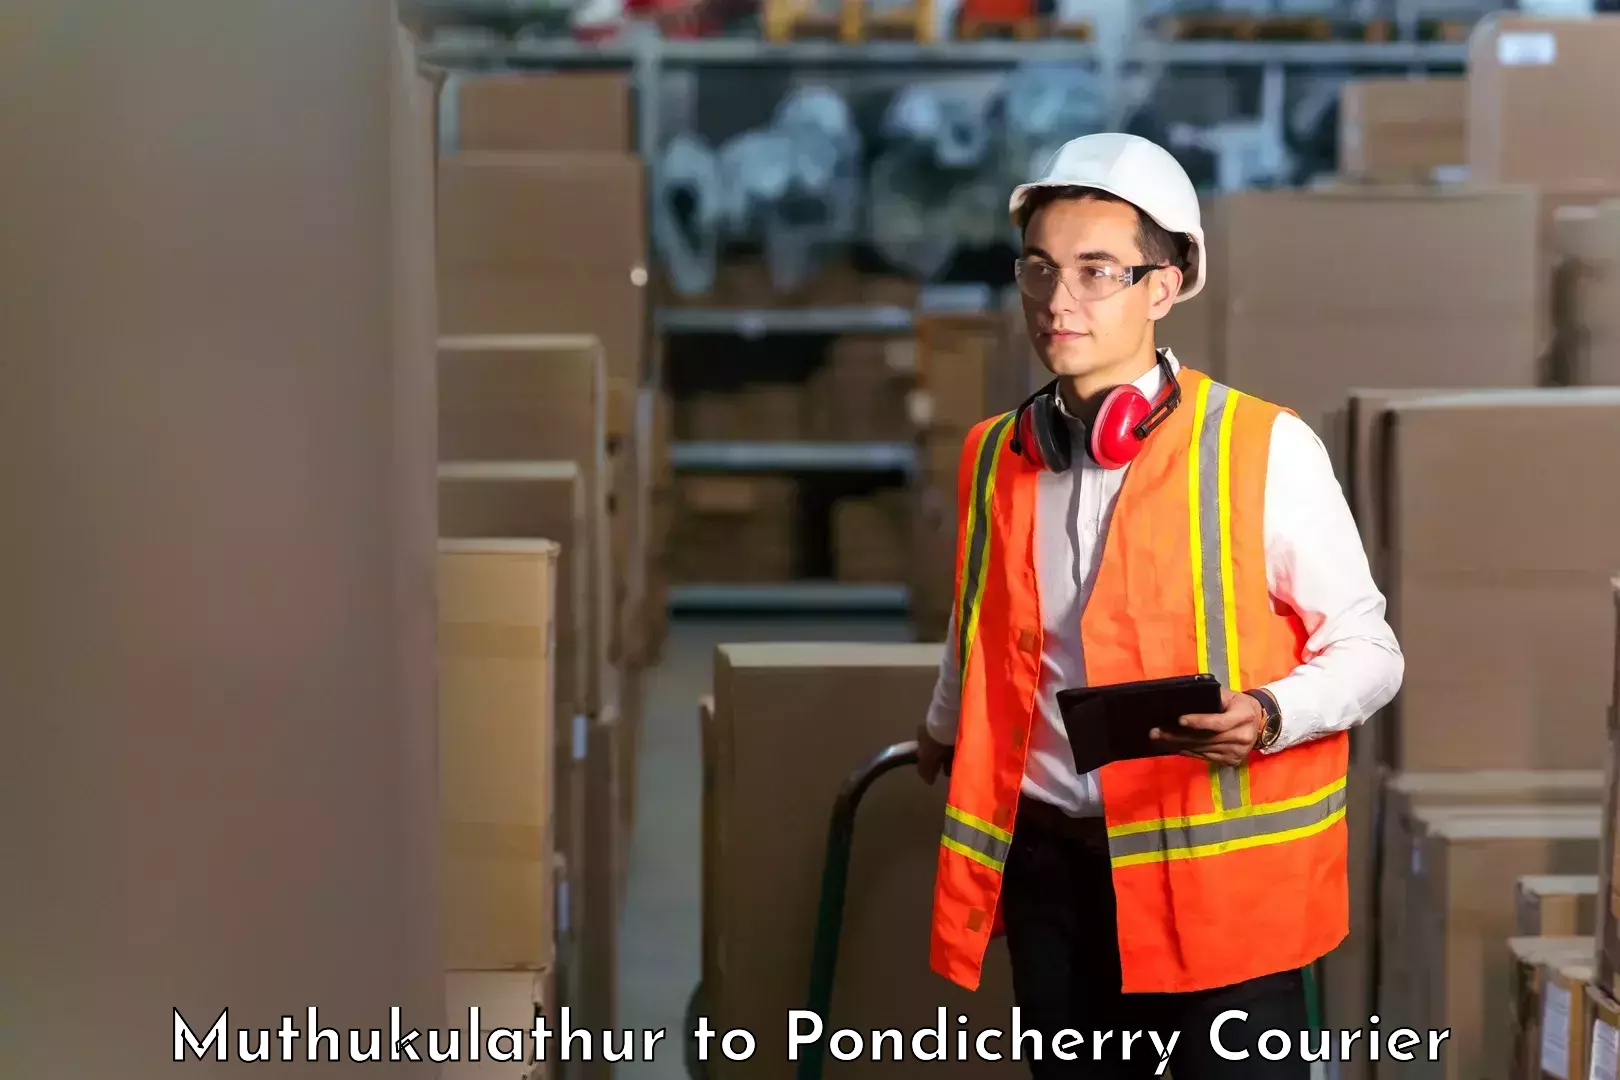 Courier service comparison Muthukulathur to Pondicherry University